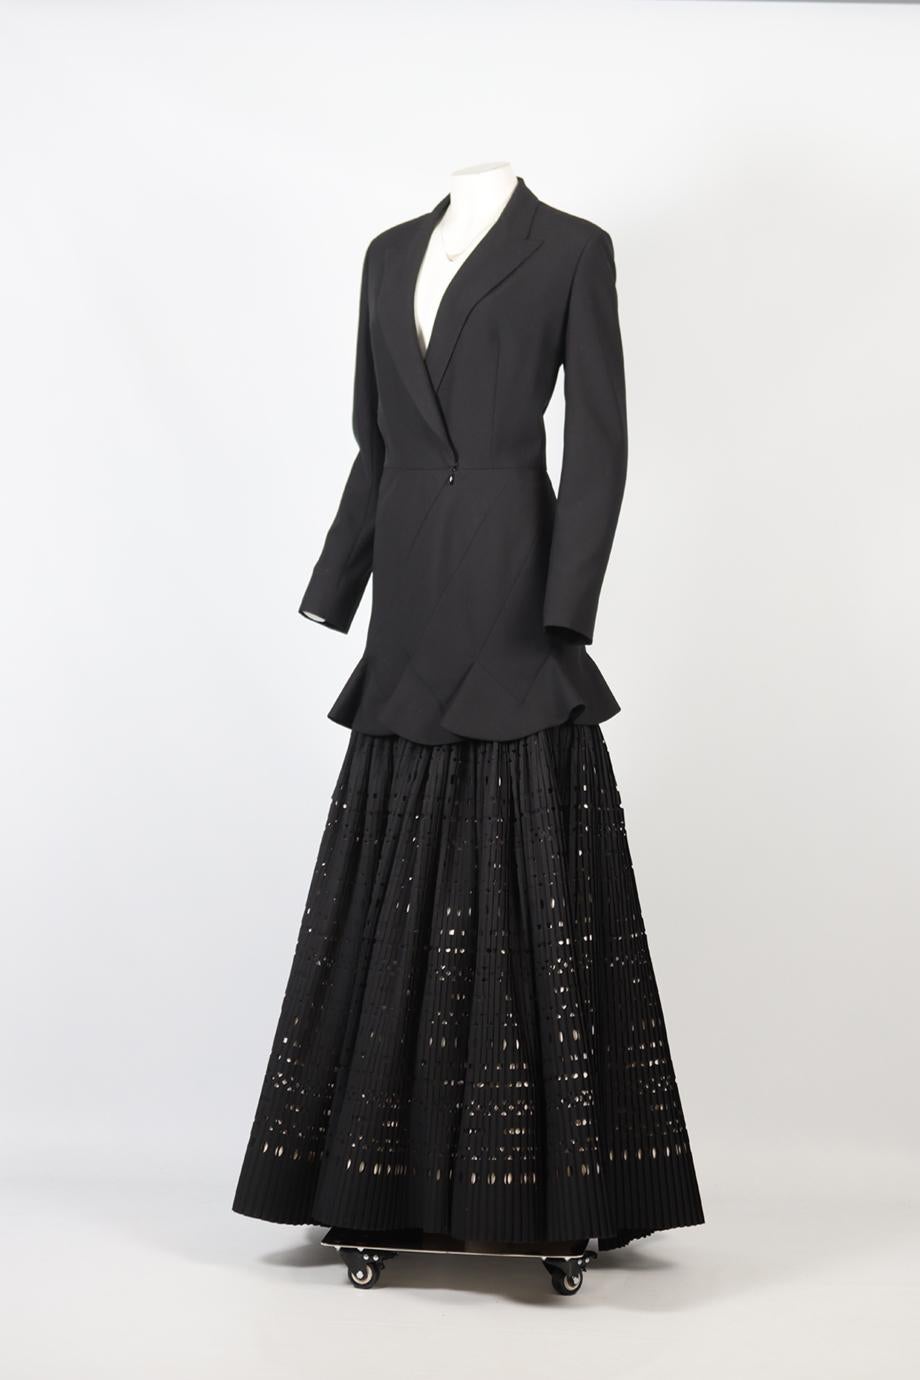 <ul>
<li>Azzedine Alaïa Haute Couture-Kleid aus einer Wollmischung.</li>
<li>Schwarz.</li>
<li>Langärmelig.</li>
<li>V-Ausschnitt.</li>
<li>Reißverschluss - Rücken.</li>
<li>Kein Label für die Zusammensetzung.</li>
<li><strong>Groß (UK 12, US 8, FR